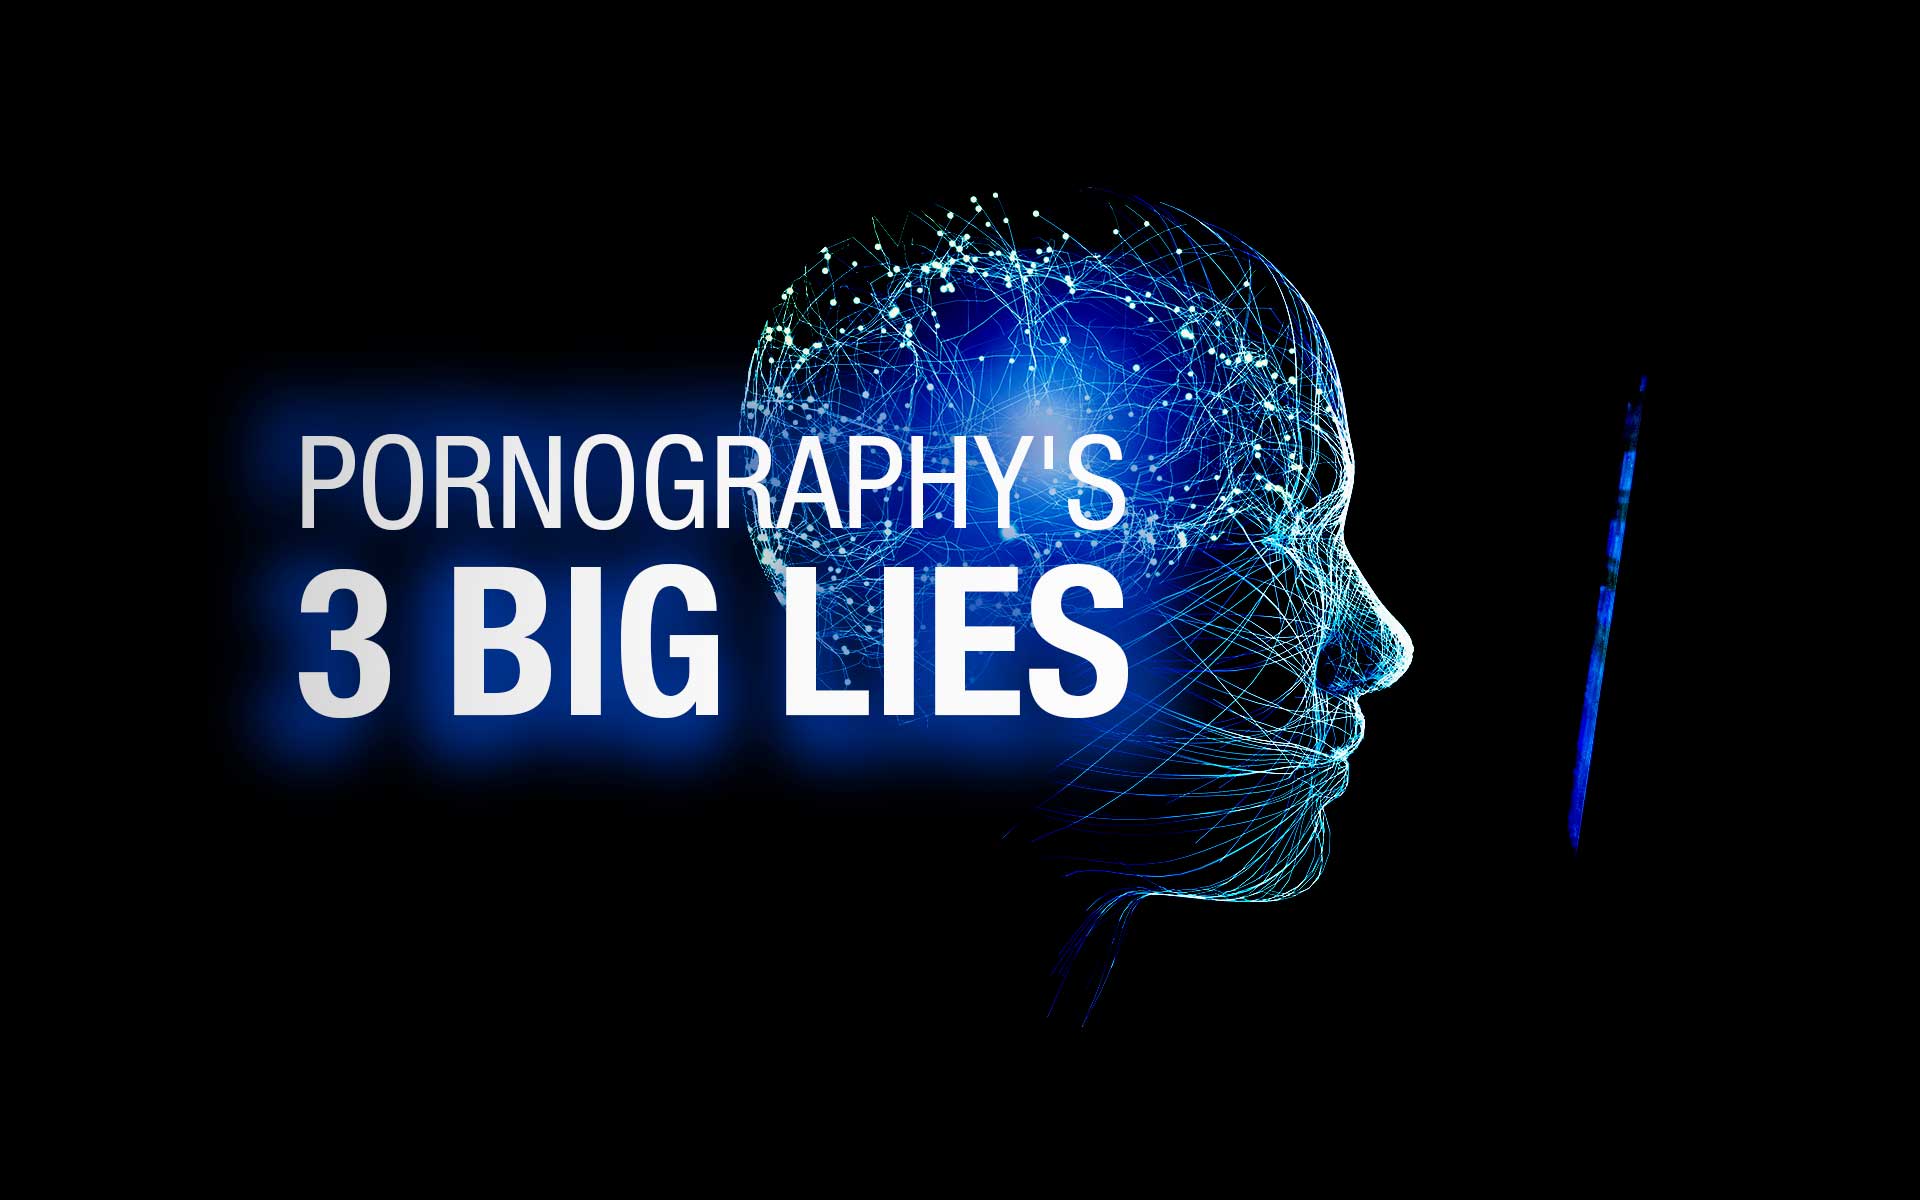 Pornography's 3 Big Lies